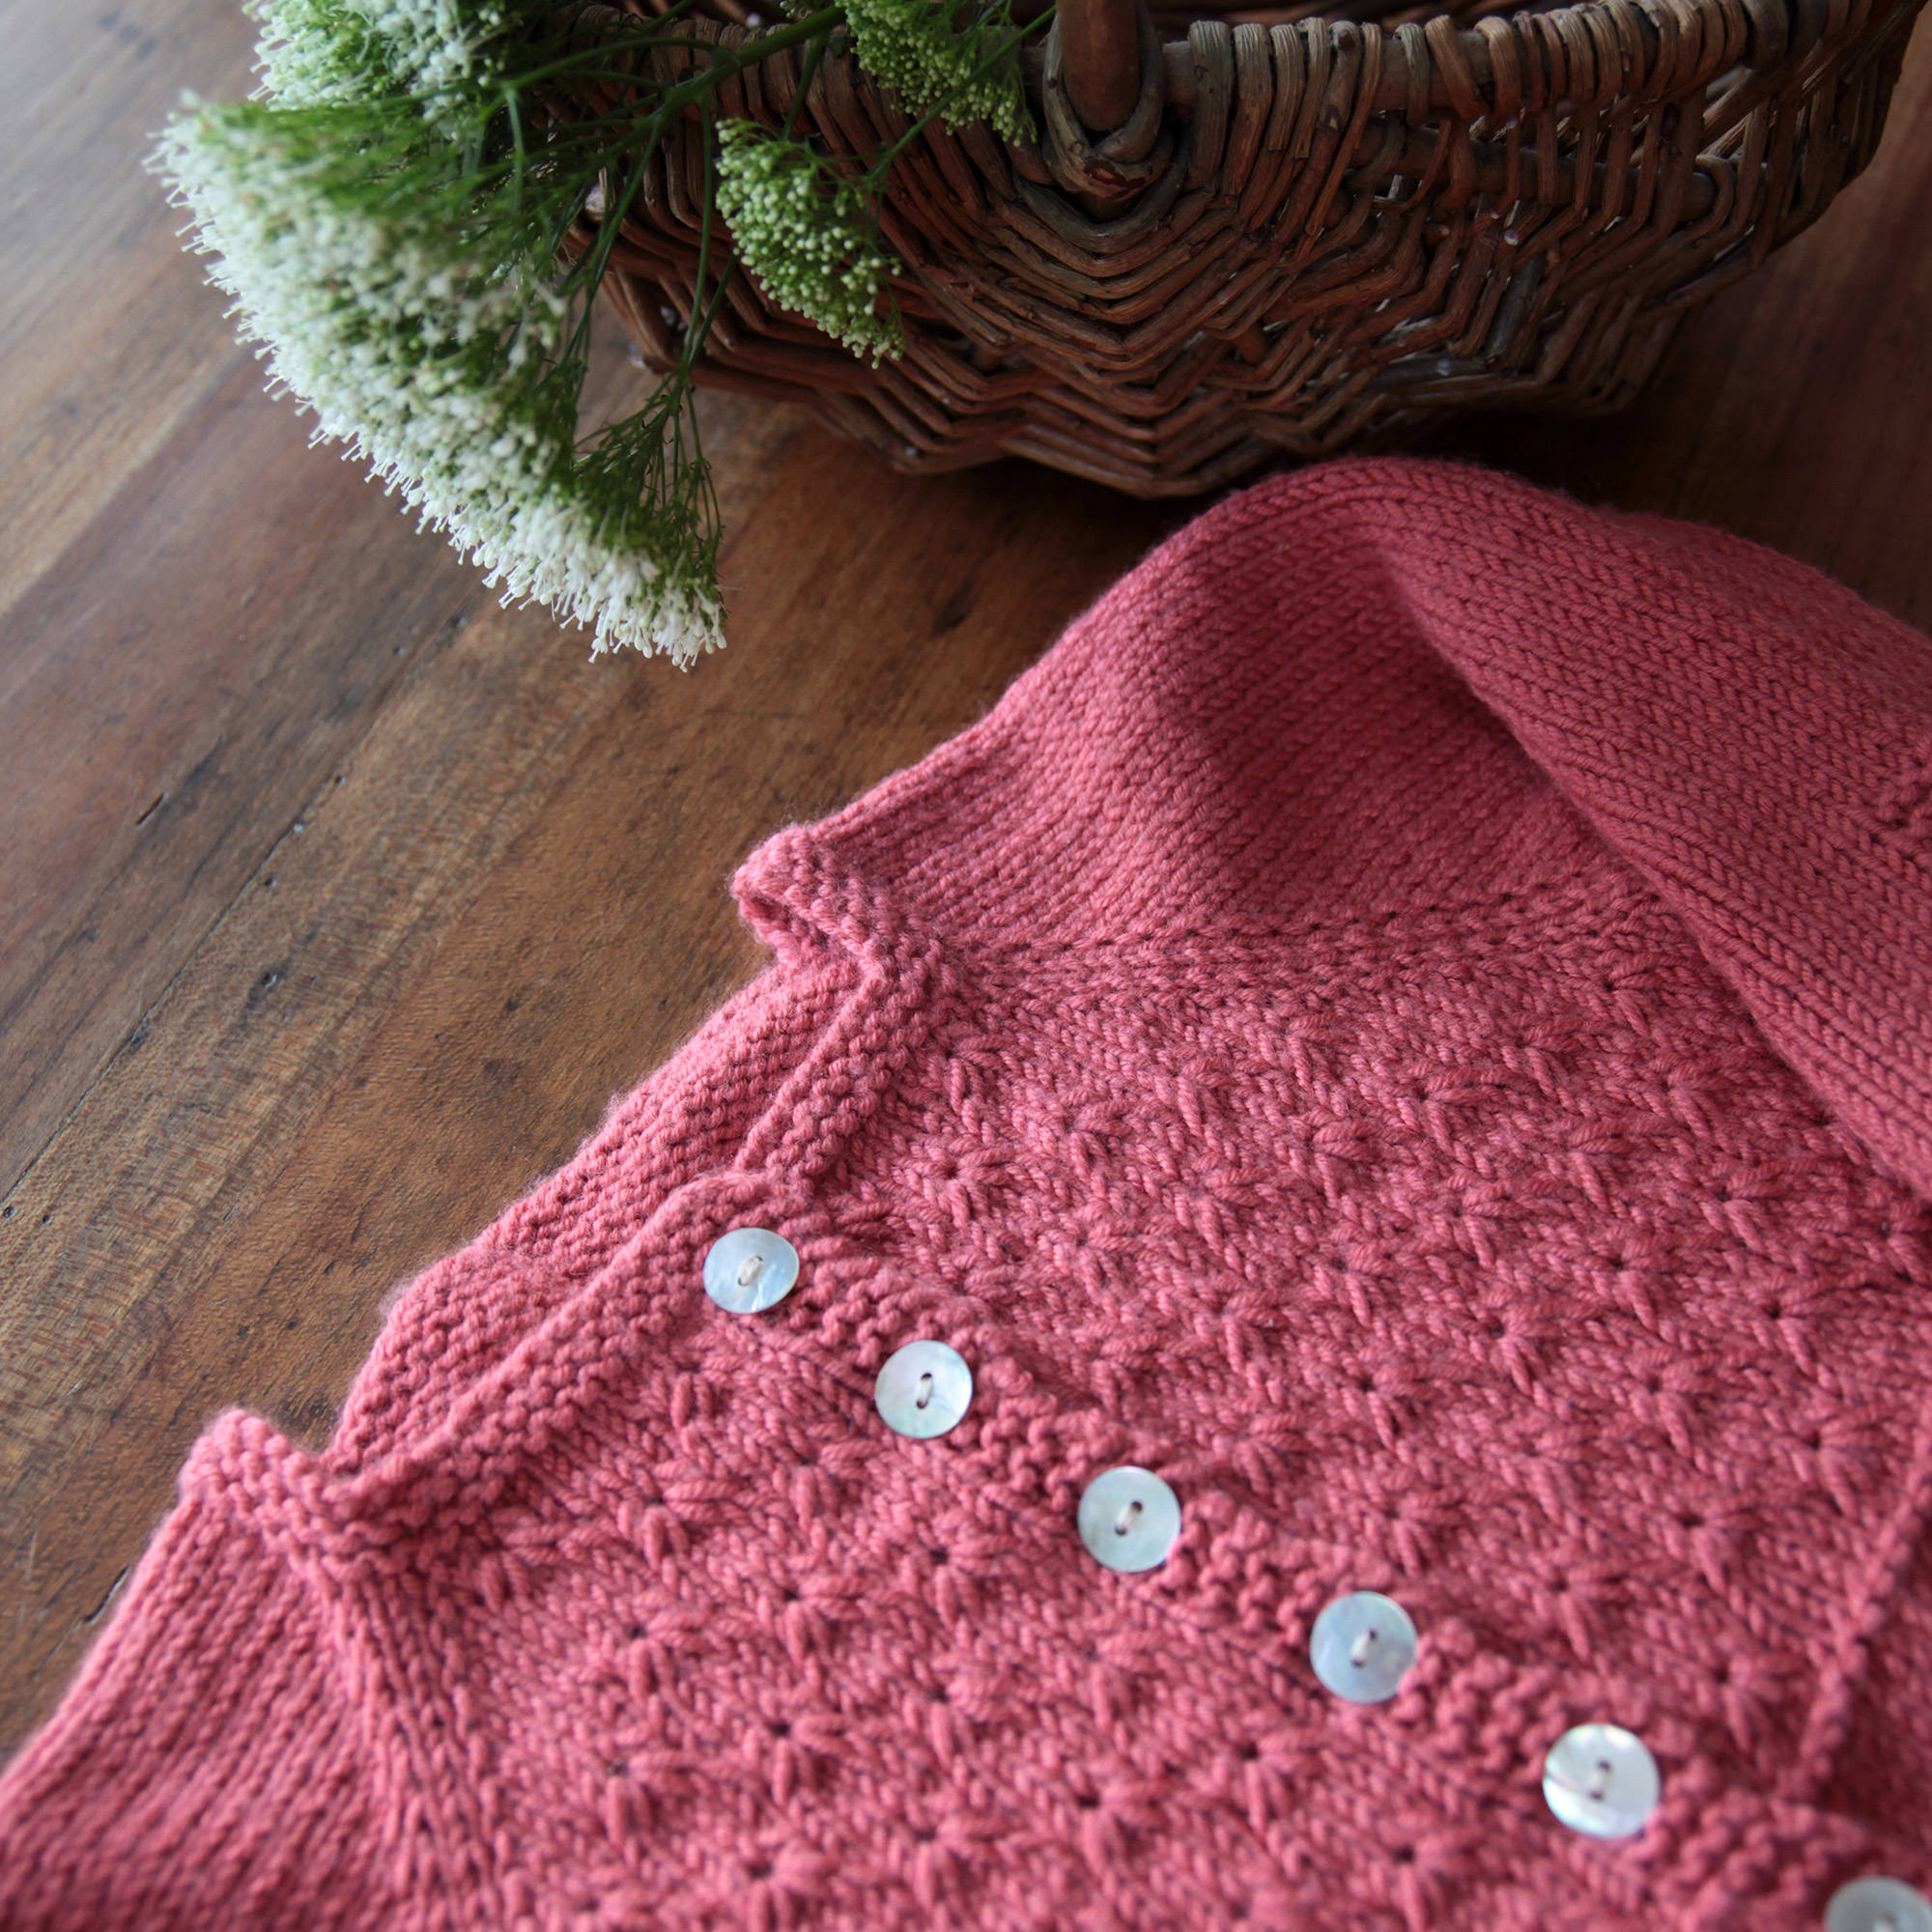 Alouette PDF knitting pattern / Fiche tricot PDF cardigan | Etsy